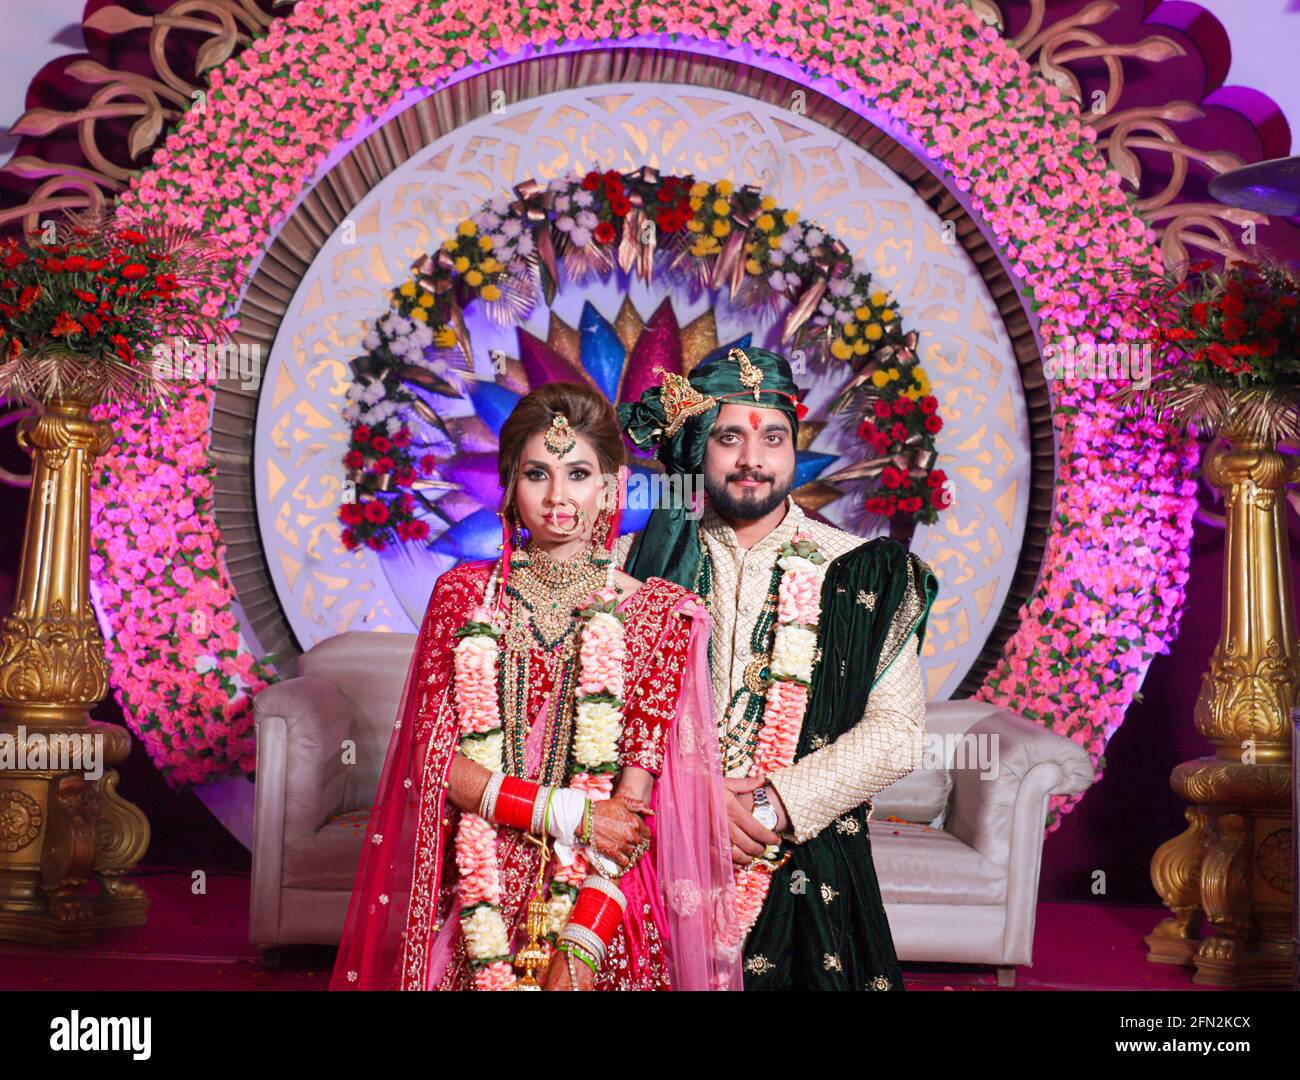 Pin by Vijay Maurya on Vijay Kumar Maurya | Bridal photography poses, Indian  wedding photography couples, Wedding couple poses photography